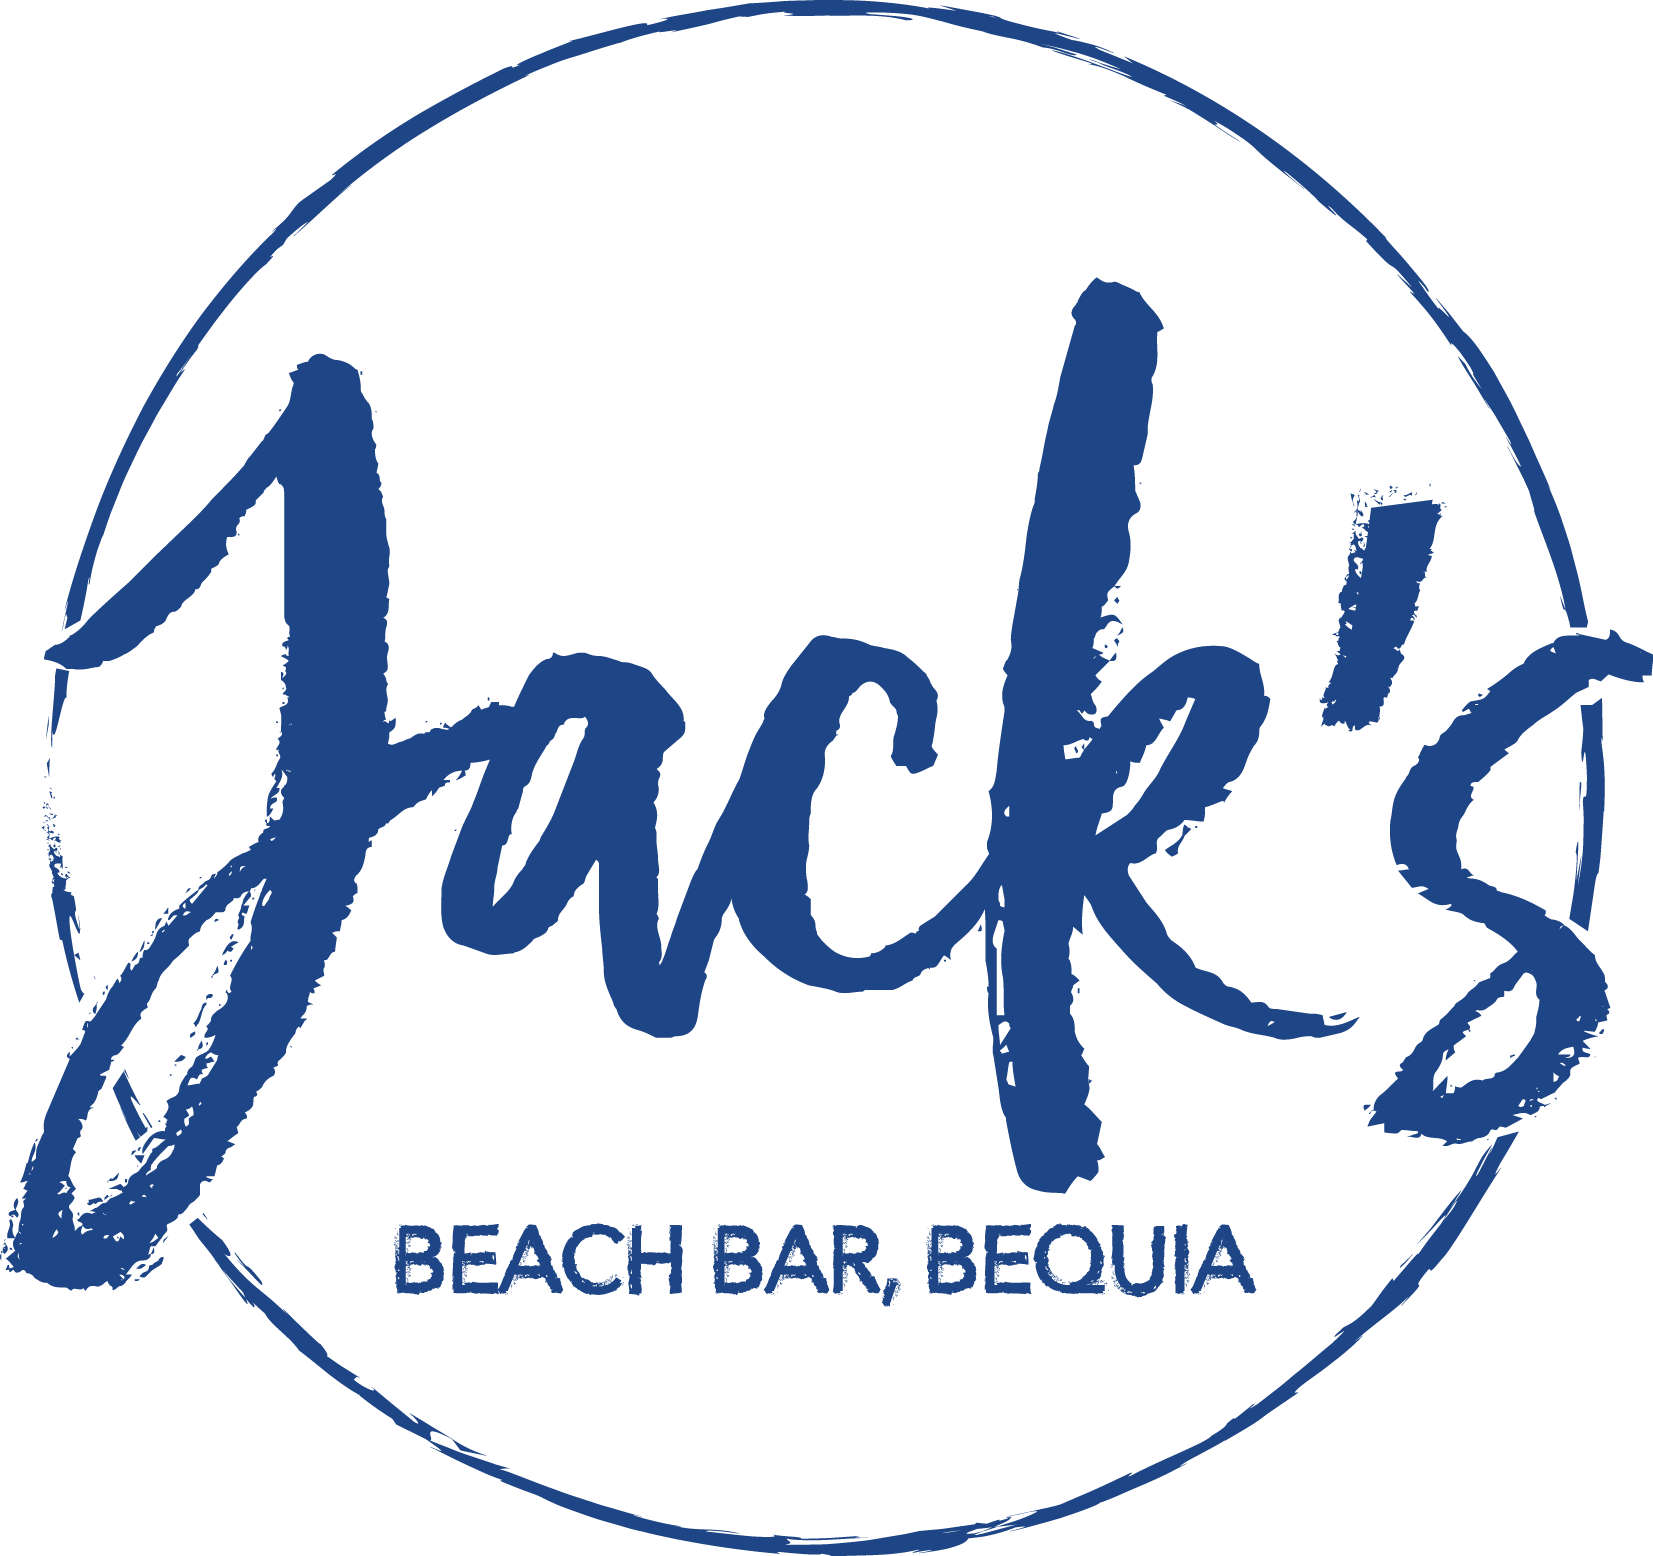 Jack's Beach Bar, Bequia